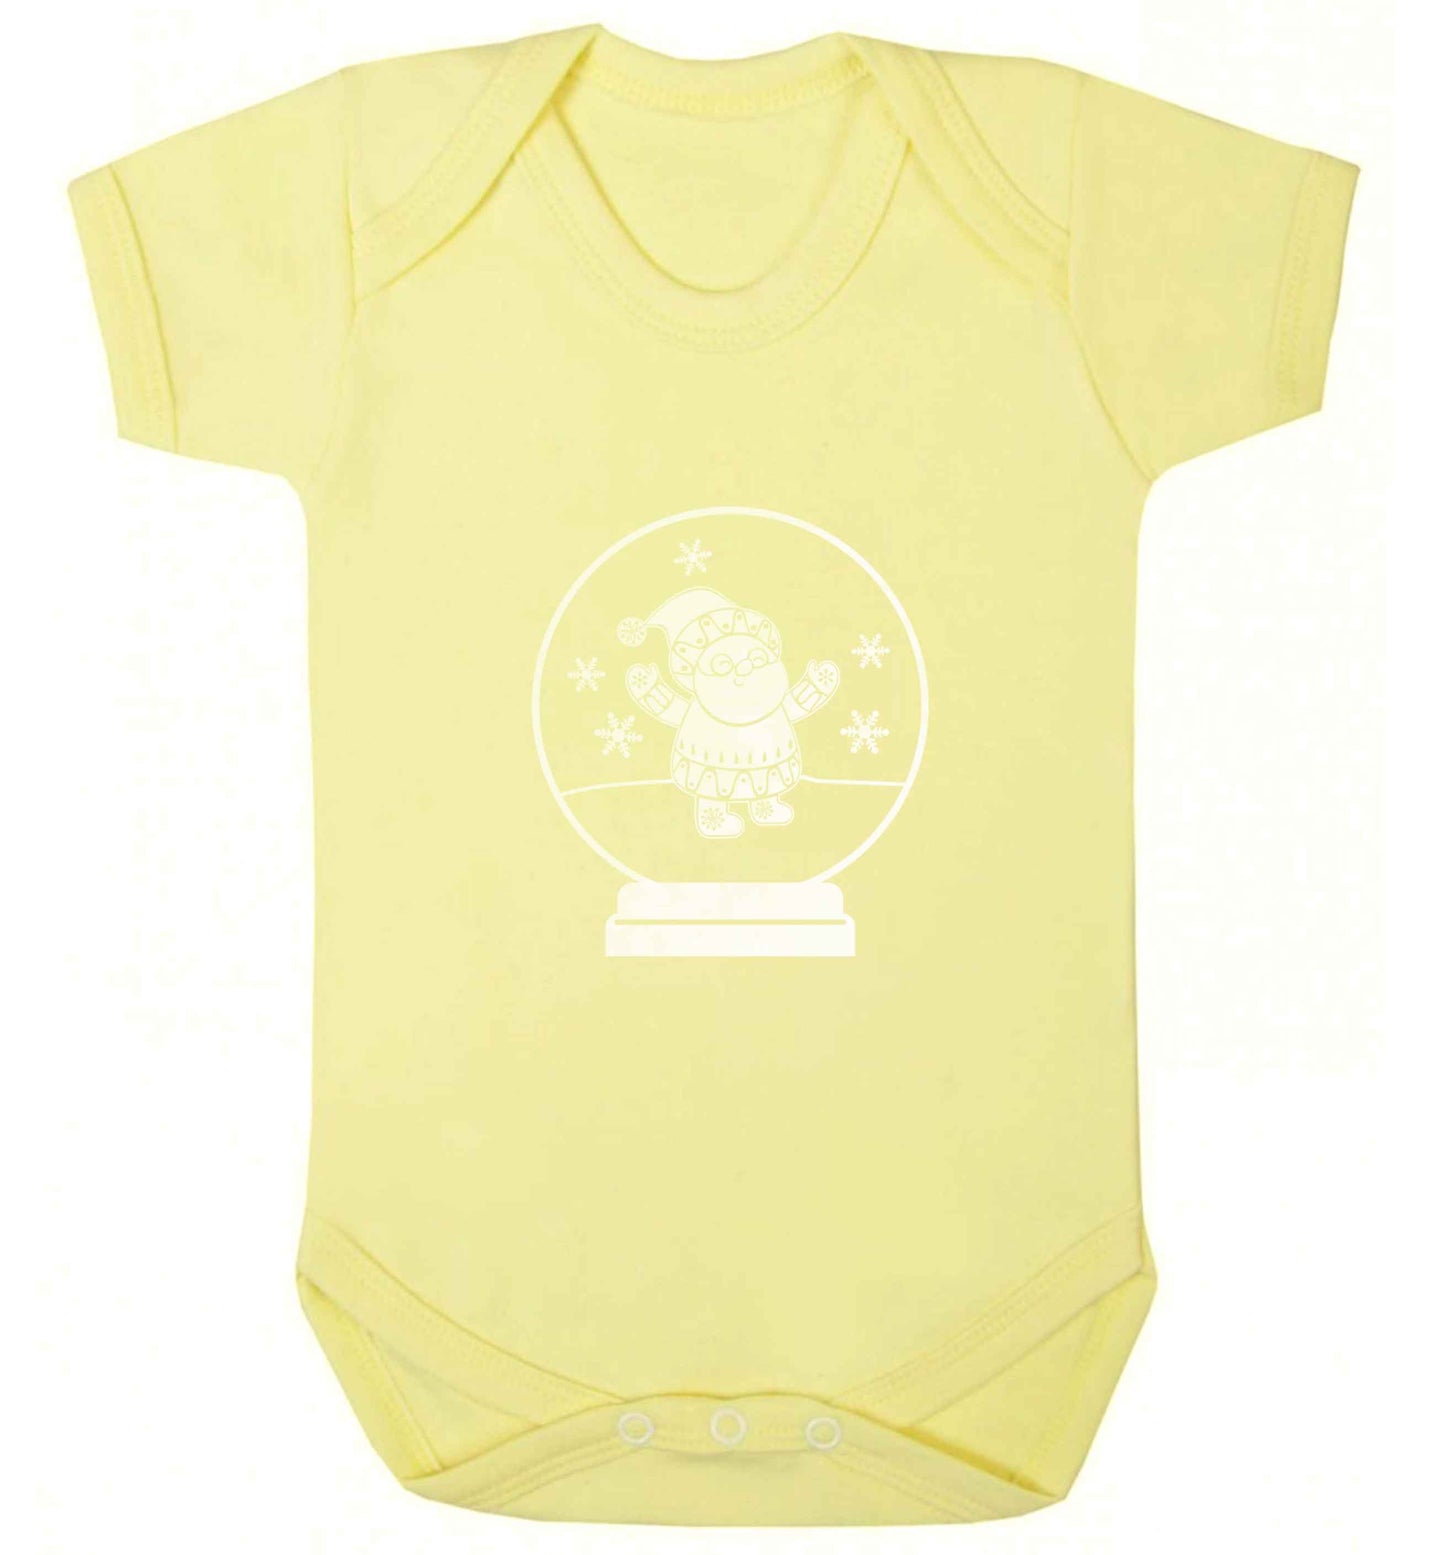 Santa snowglobe baby vest pale yellow 18-24 months